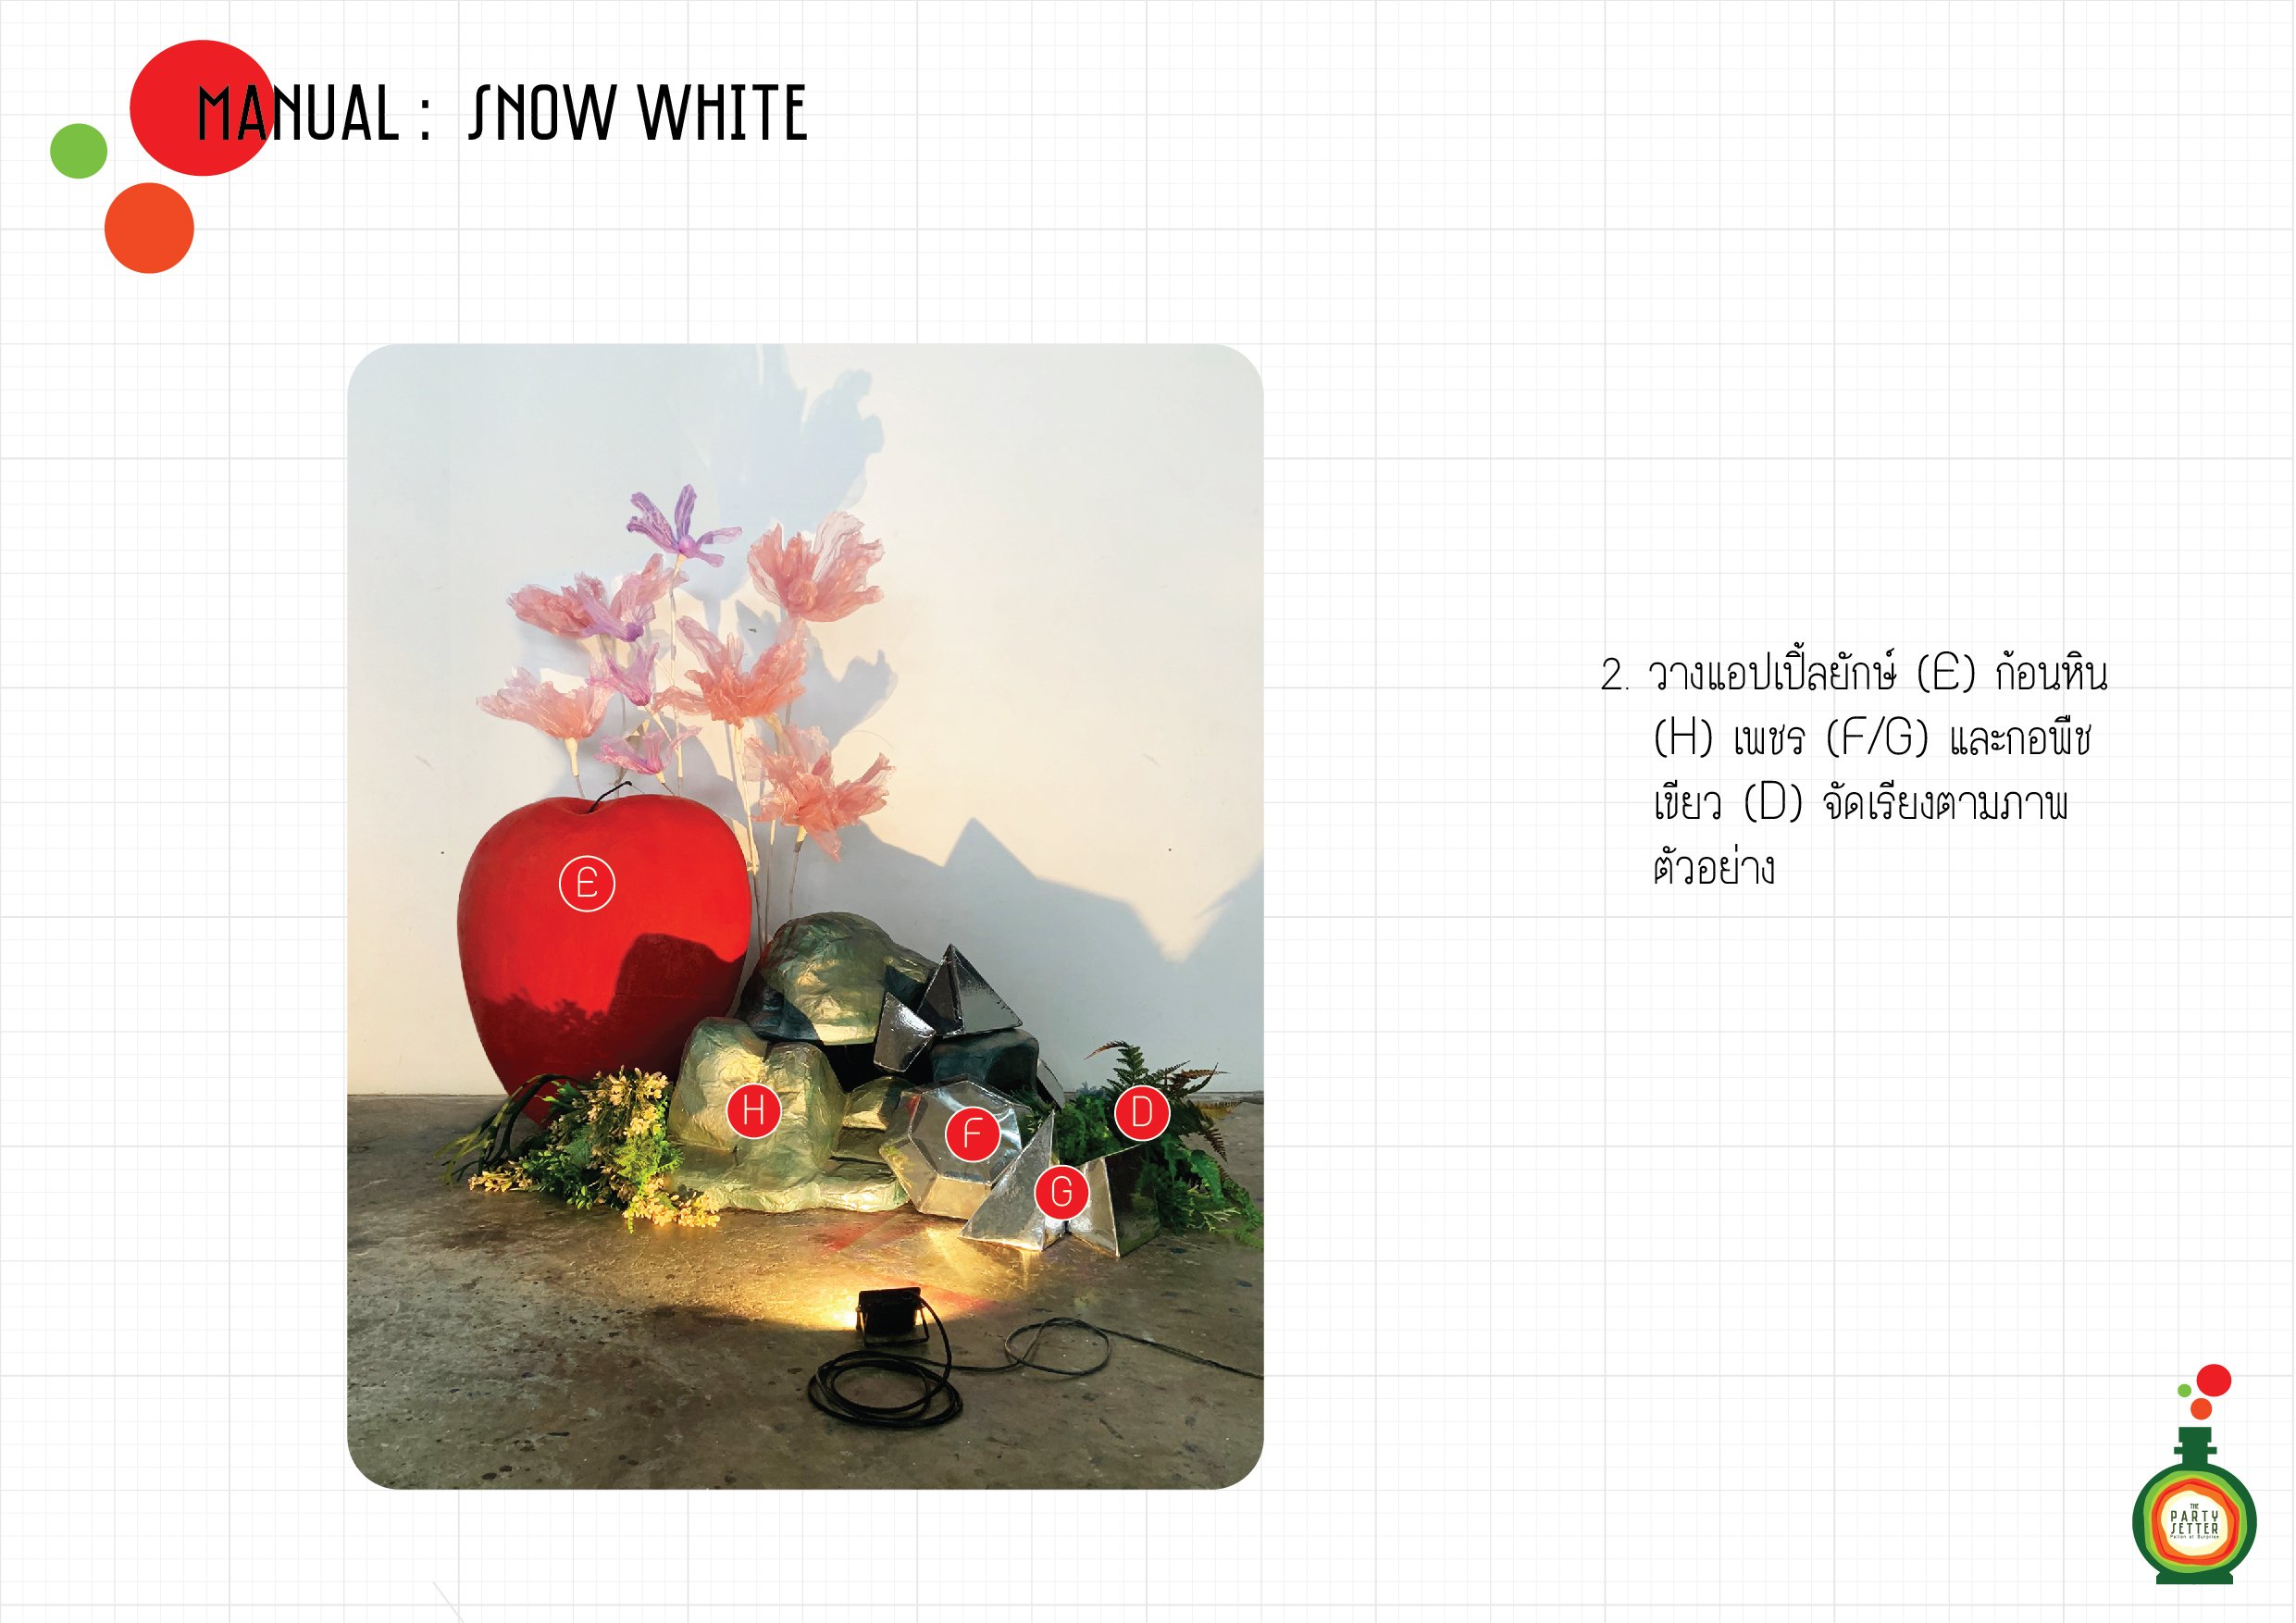 Manual_Snow White-02-01.jpg